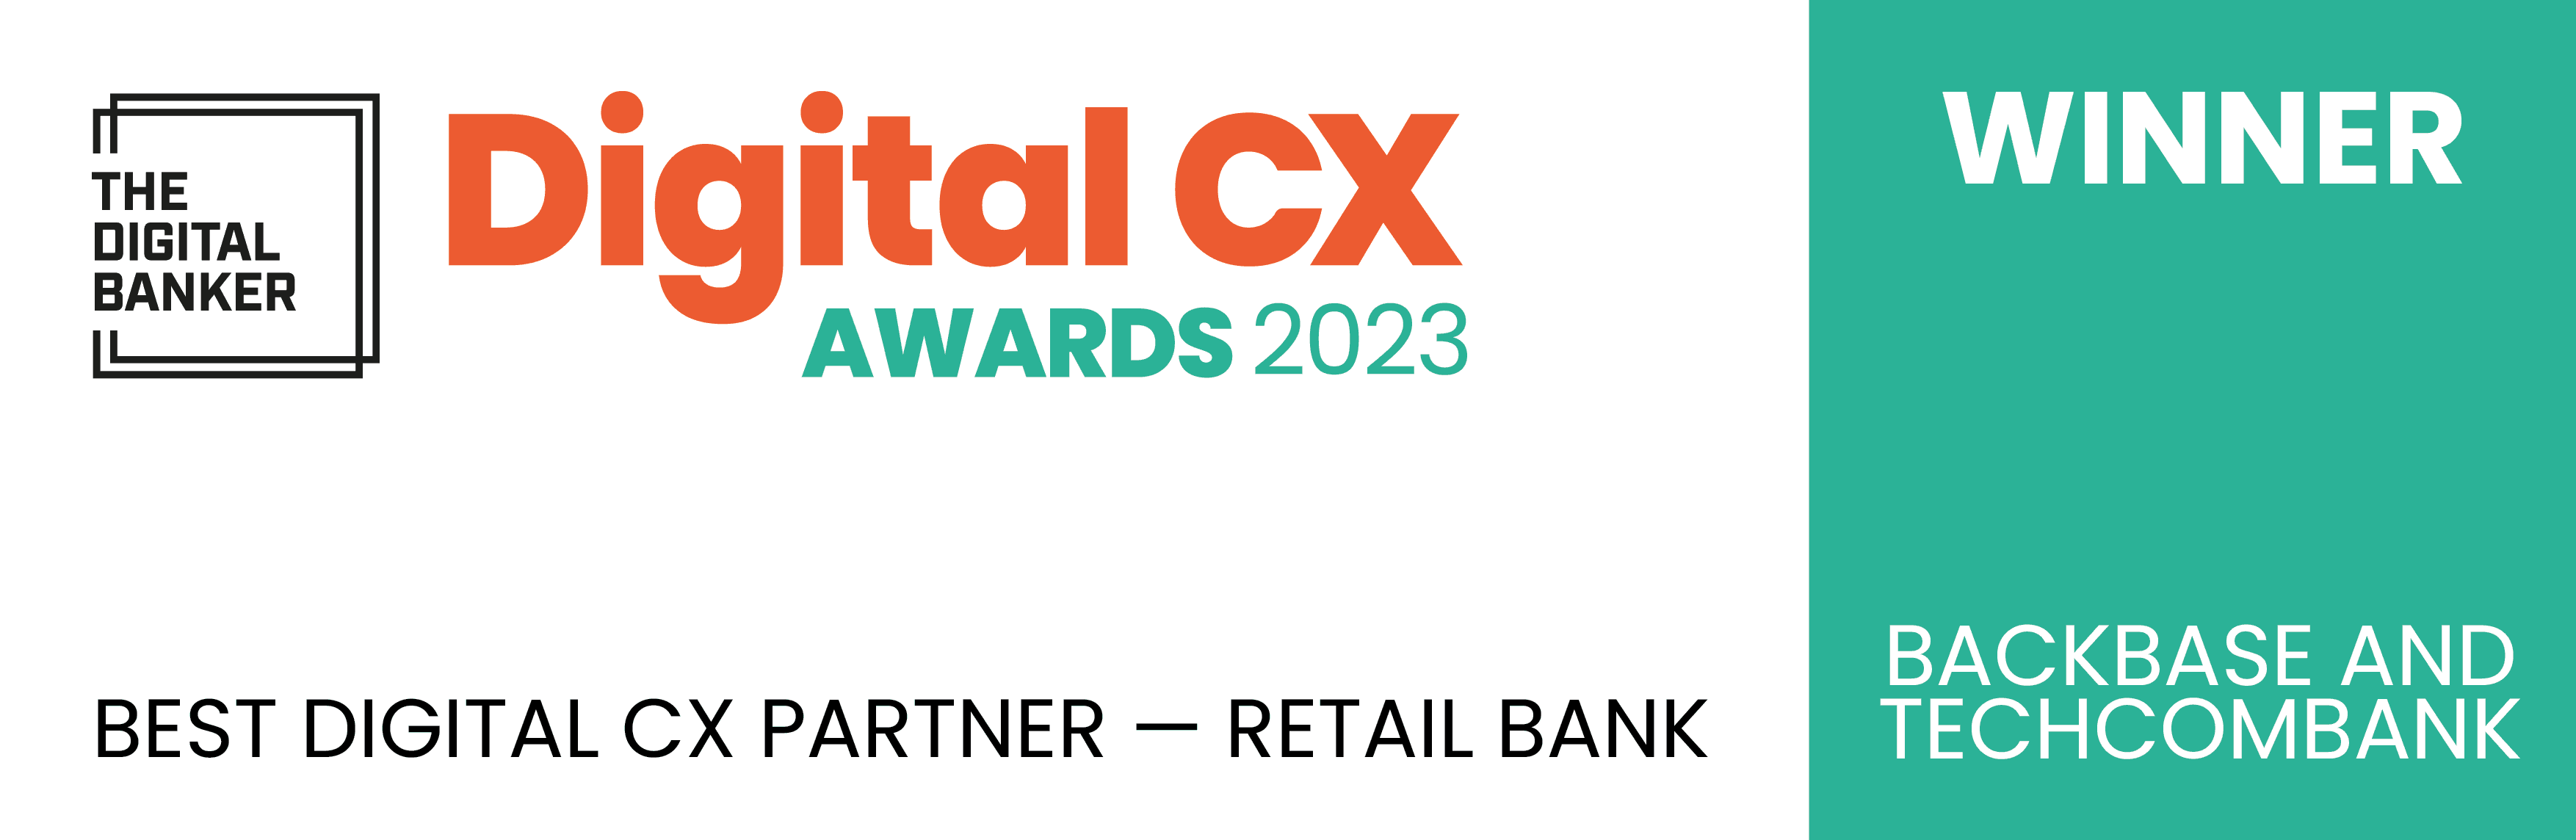 Best Digital CX Partner Retail Bank Backbase Techcombank